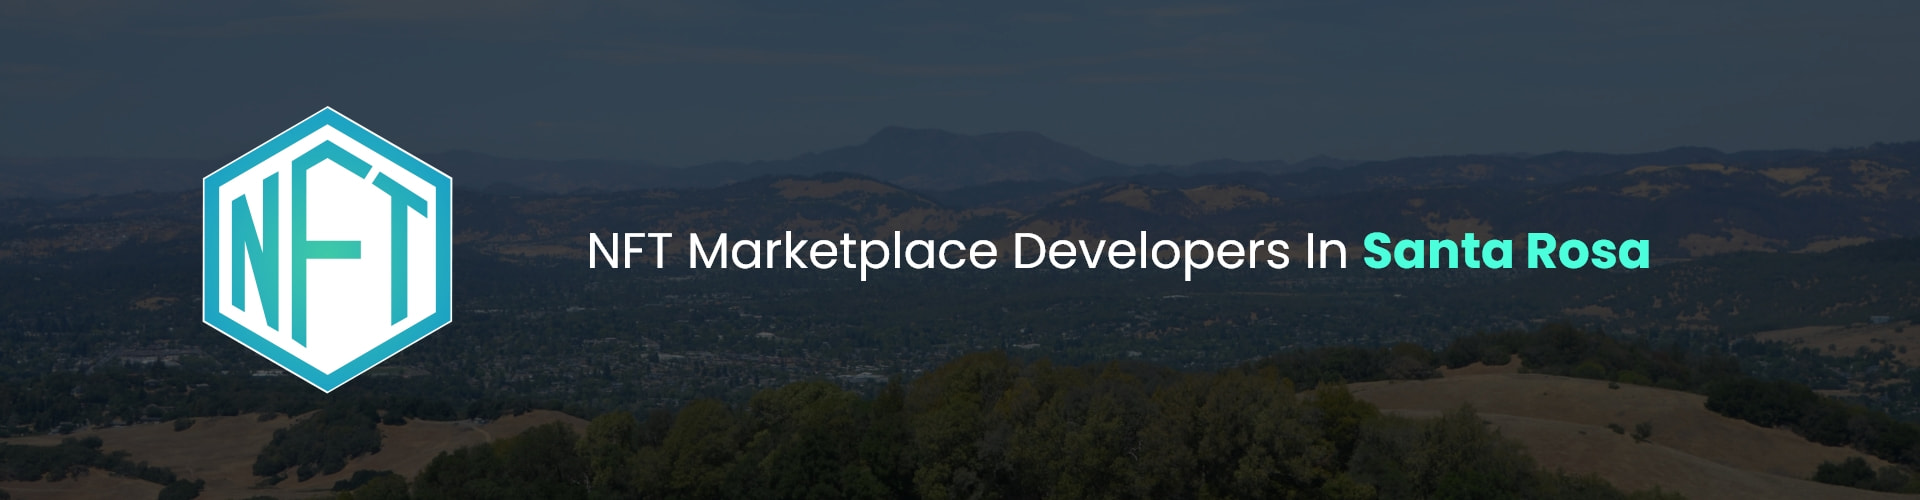 hire nft marketplace developers in santa rosa